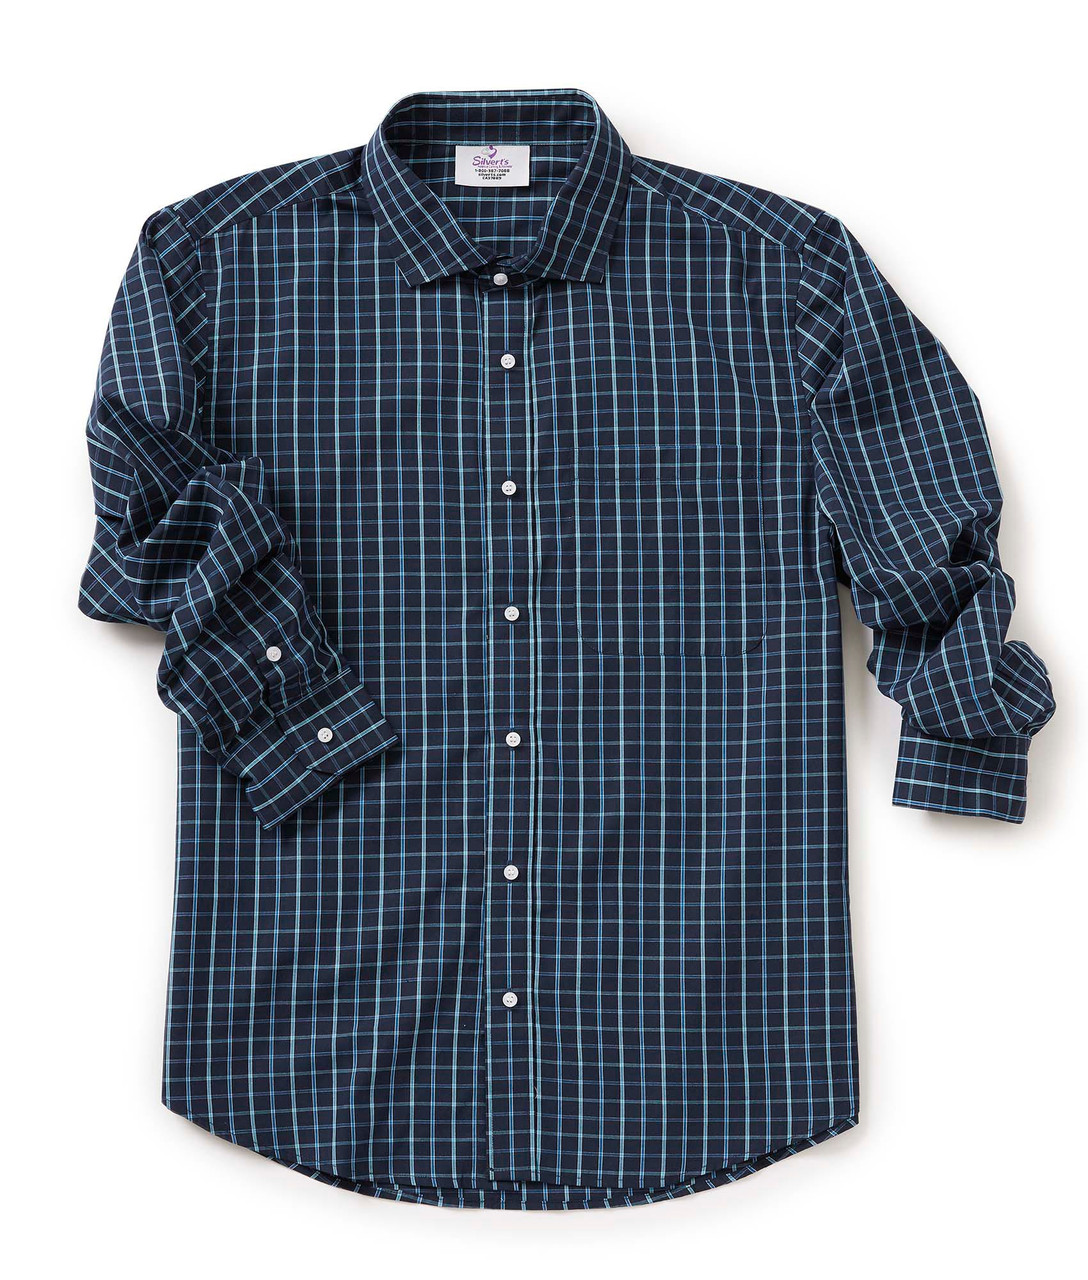 Silverts SV40000 Magnetic Buttons Dress Shirt for Men Multi-Blue Check, Size=L, SV40000-SV1418-L